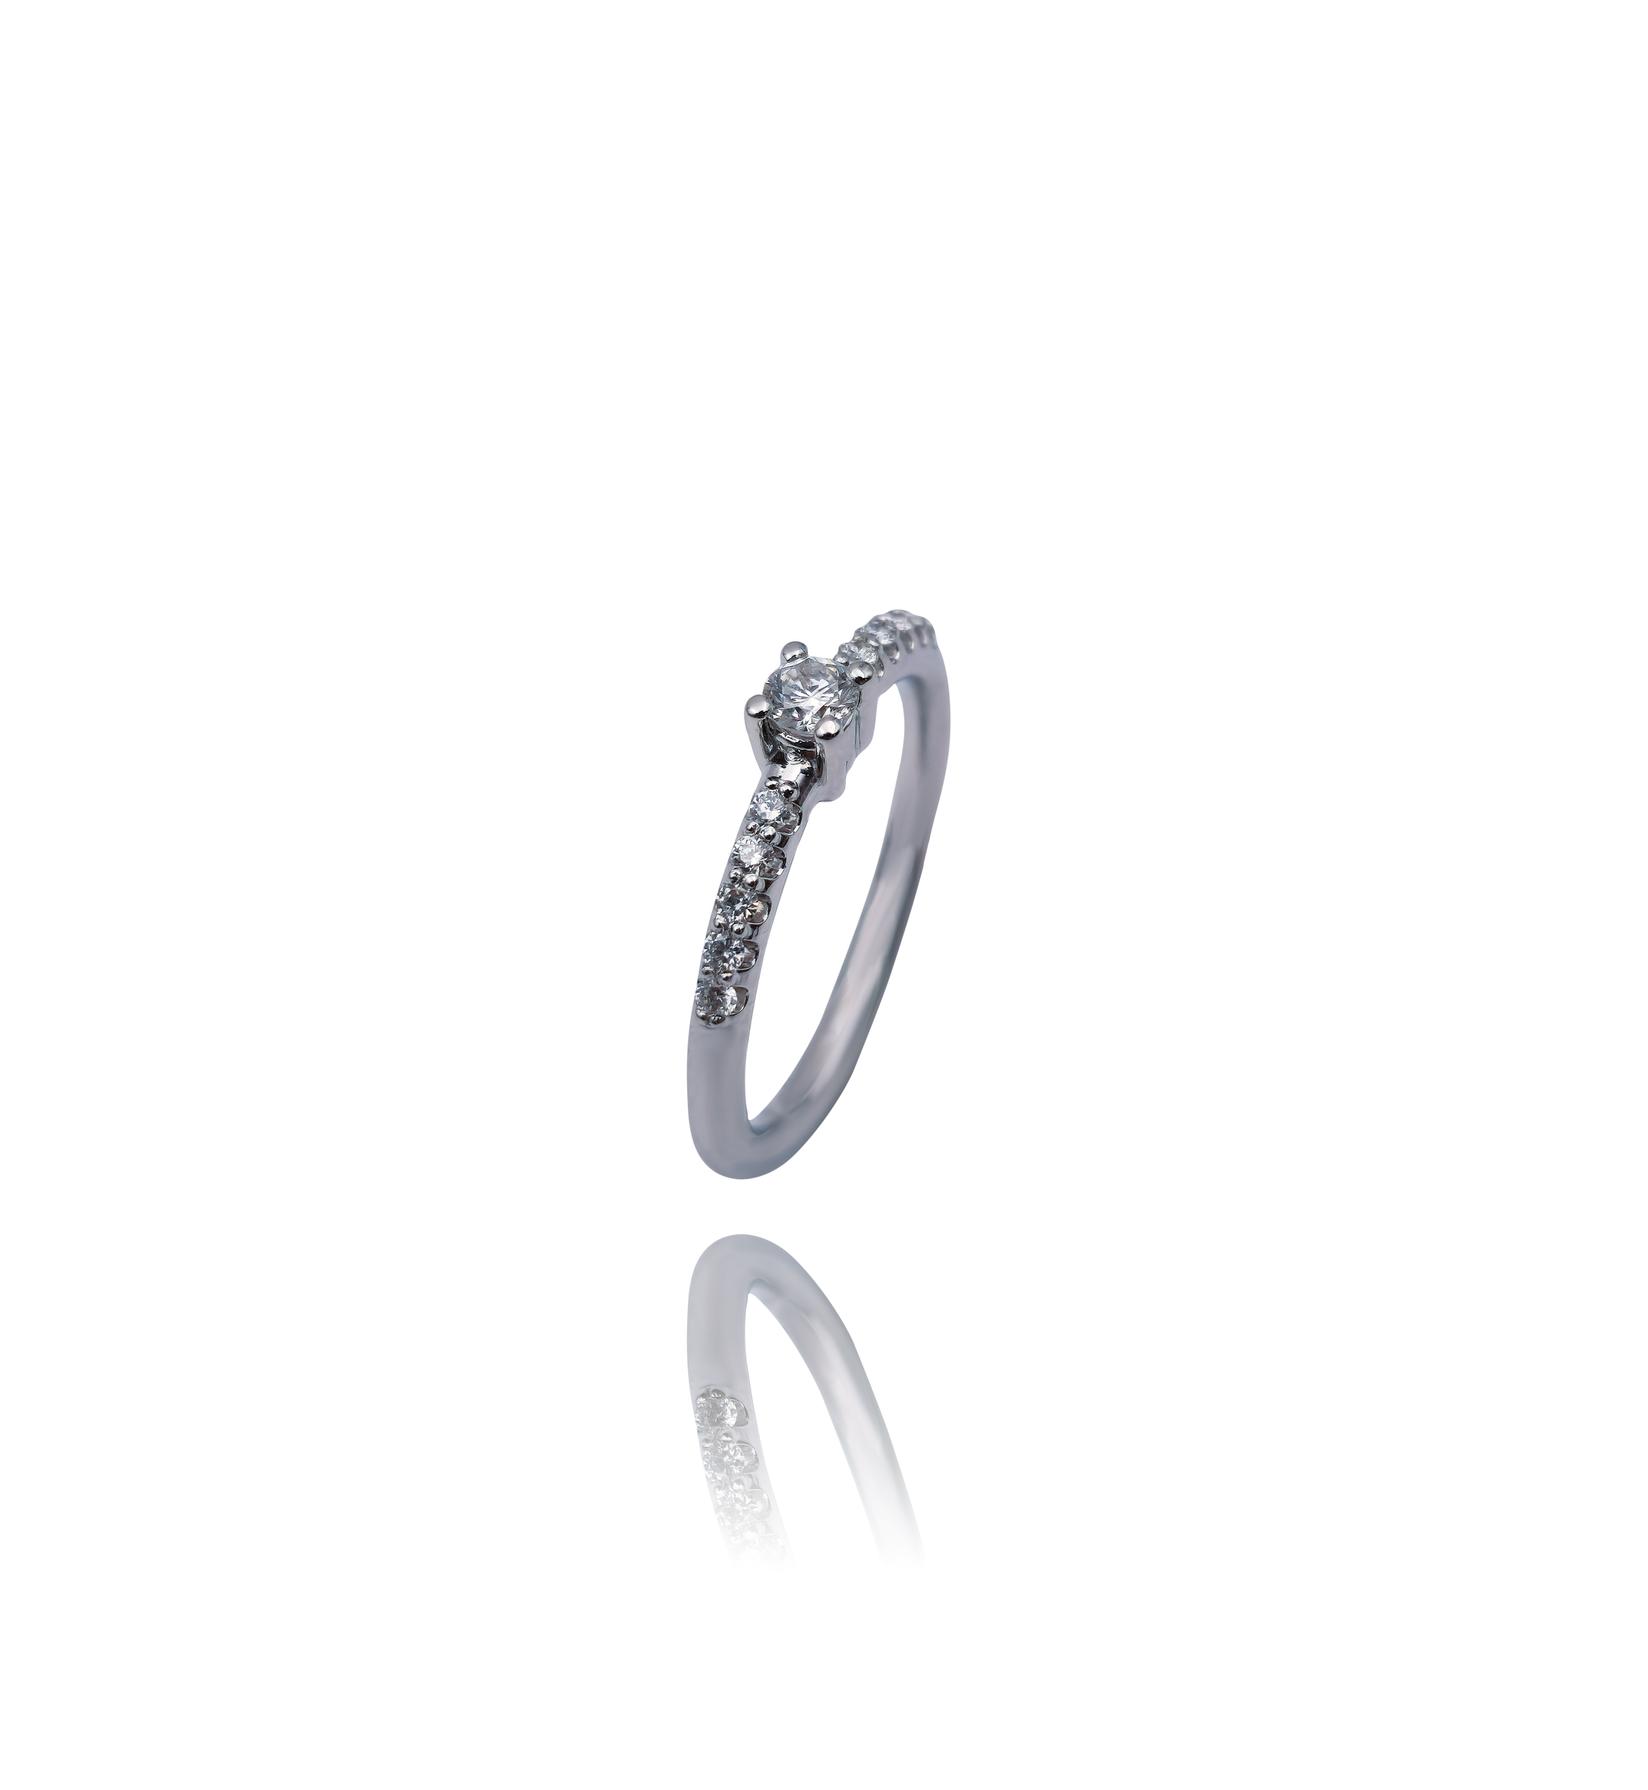 Selected image for Ženski prsten od Belog zlata sa Brilijantima, 585, 14mm